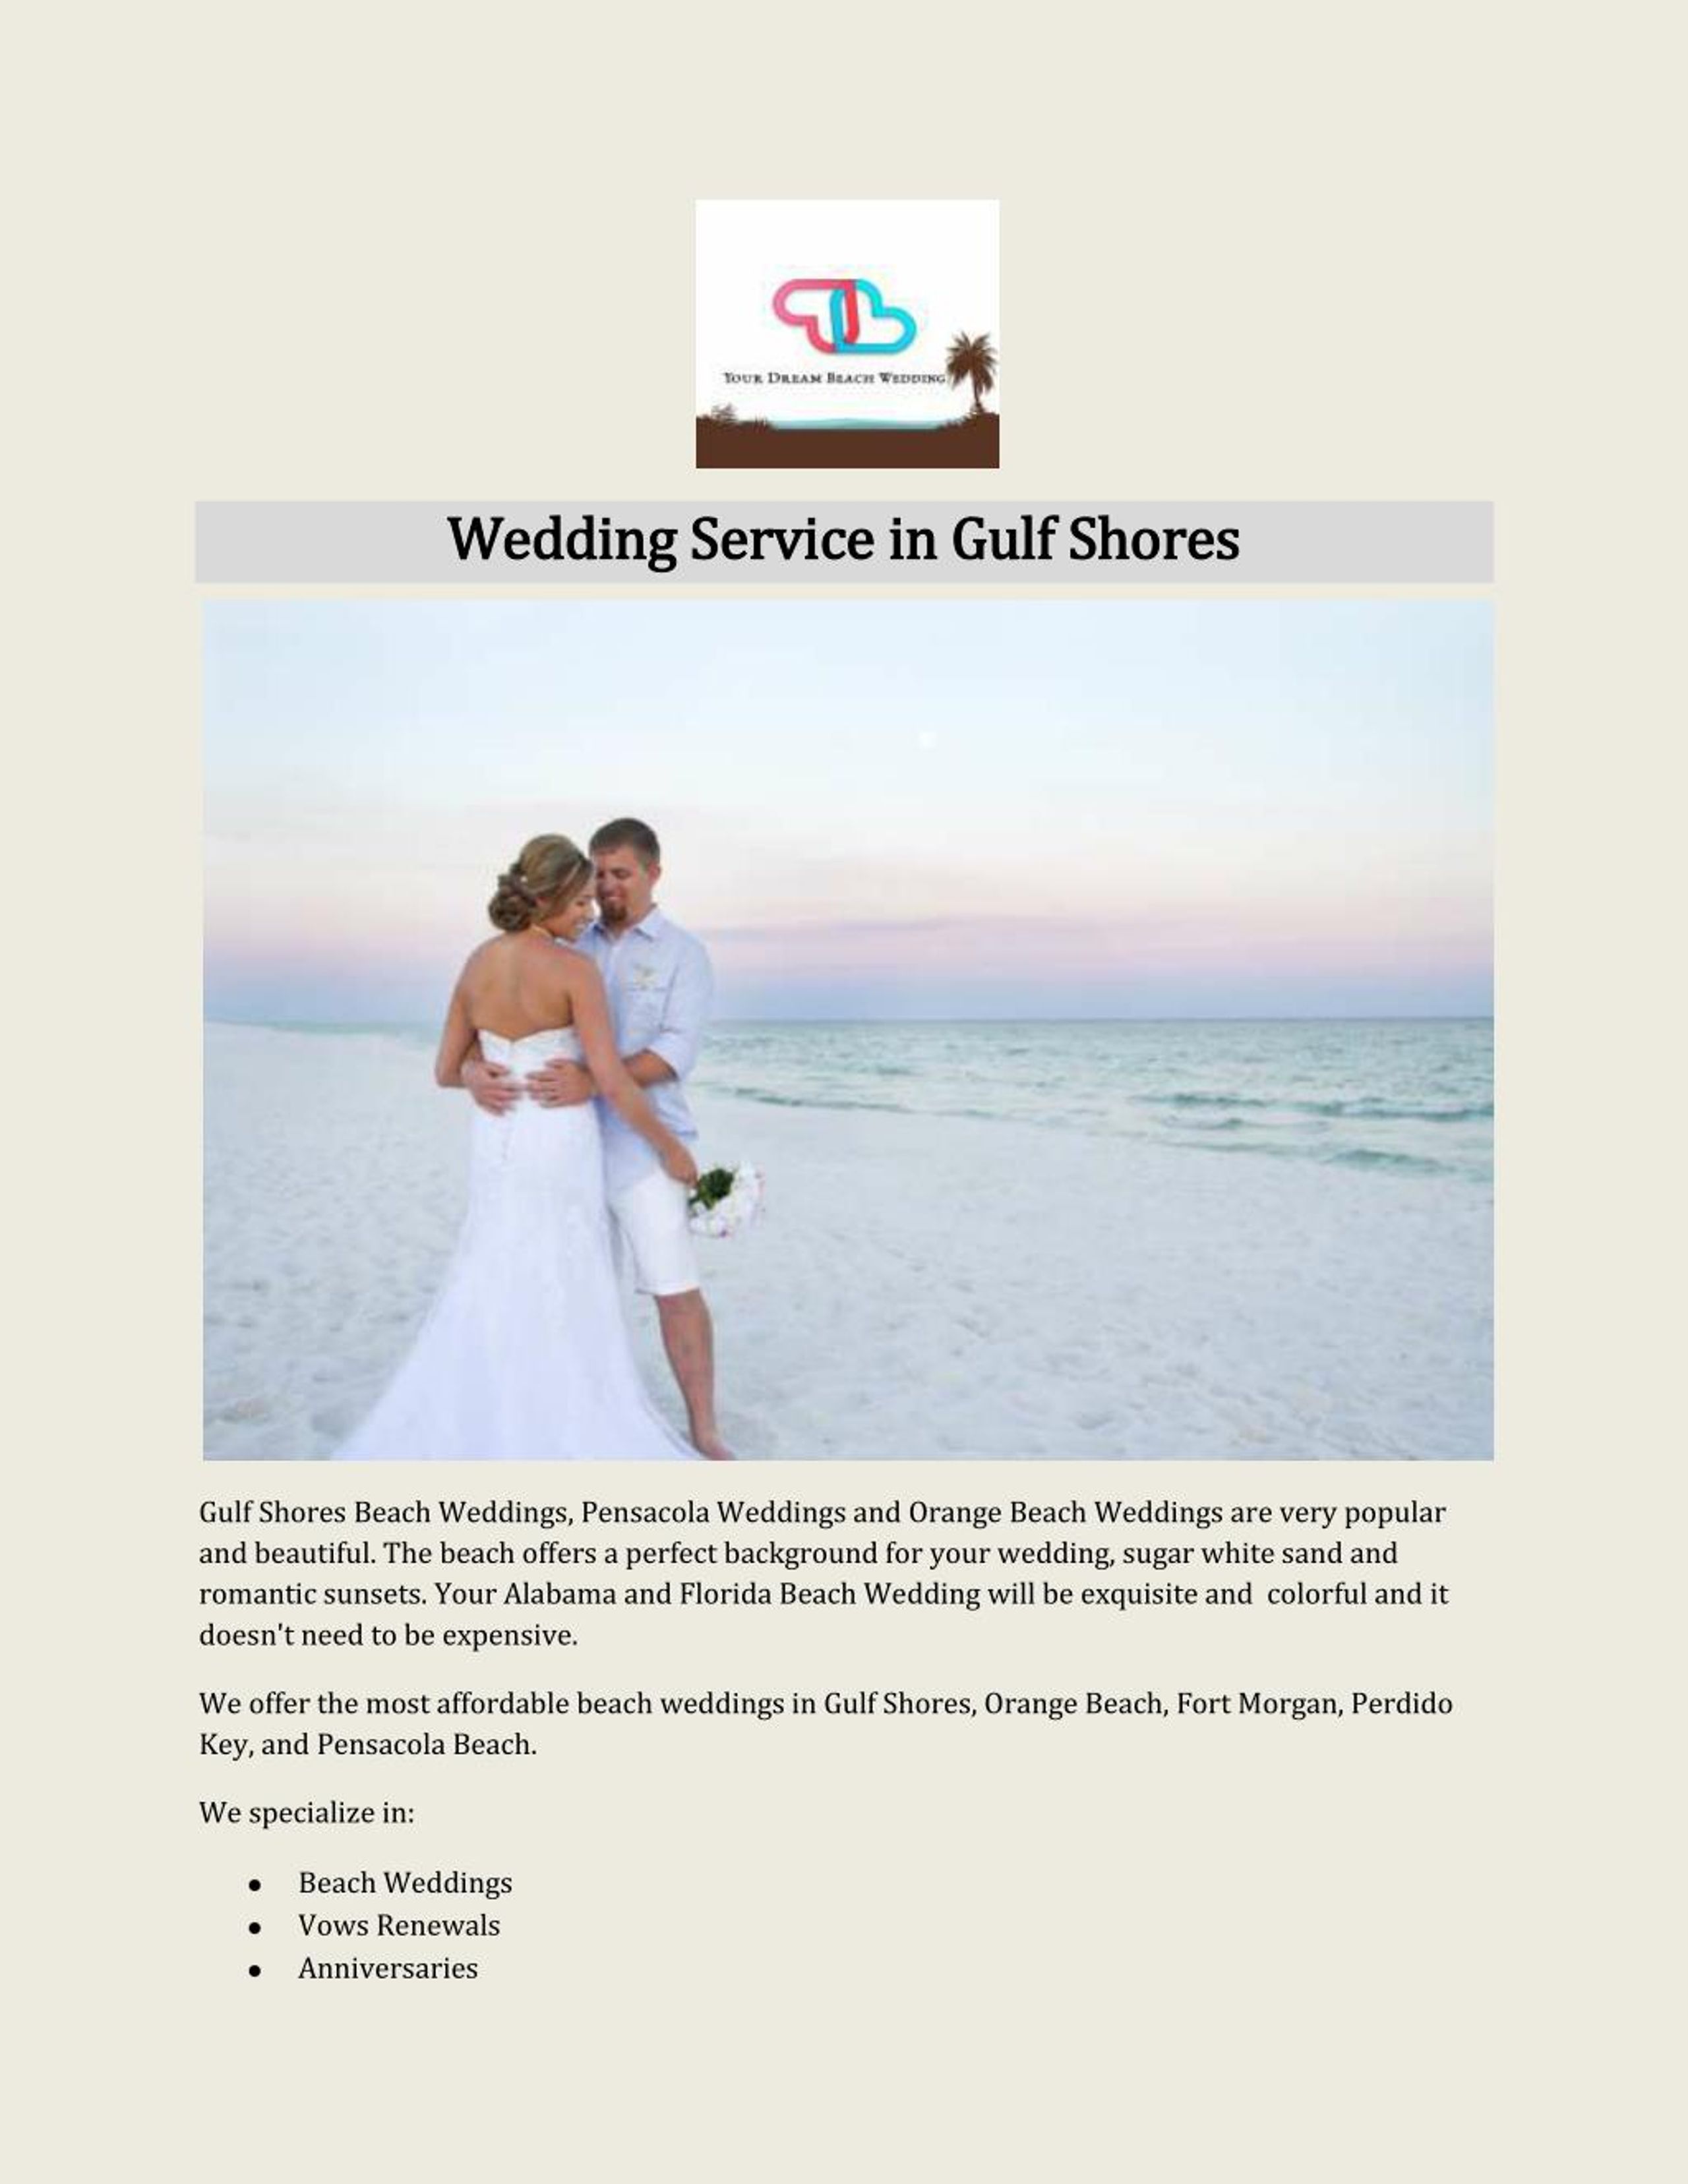 Ppt Wedding Service In Gulf Shores Powerpoint Presentation Id